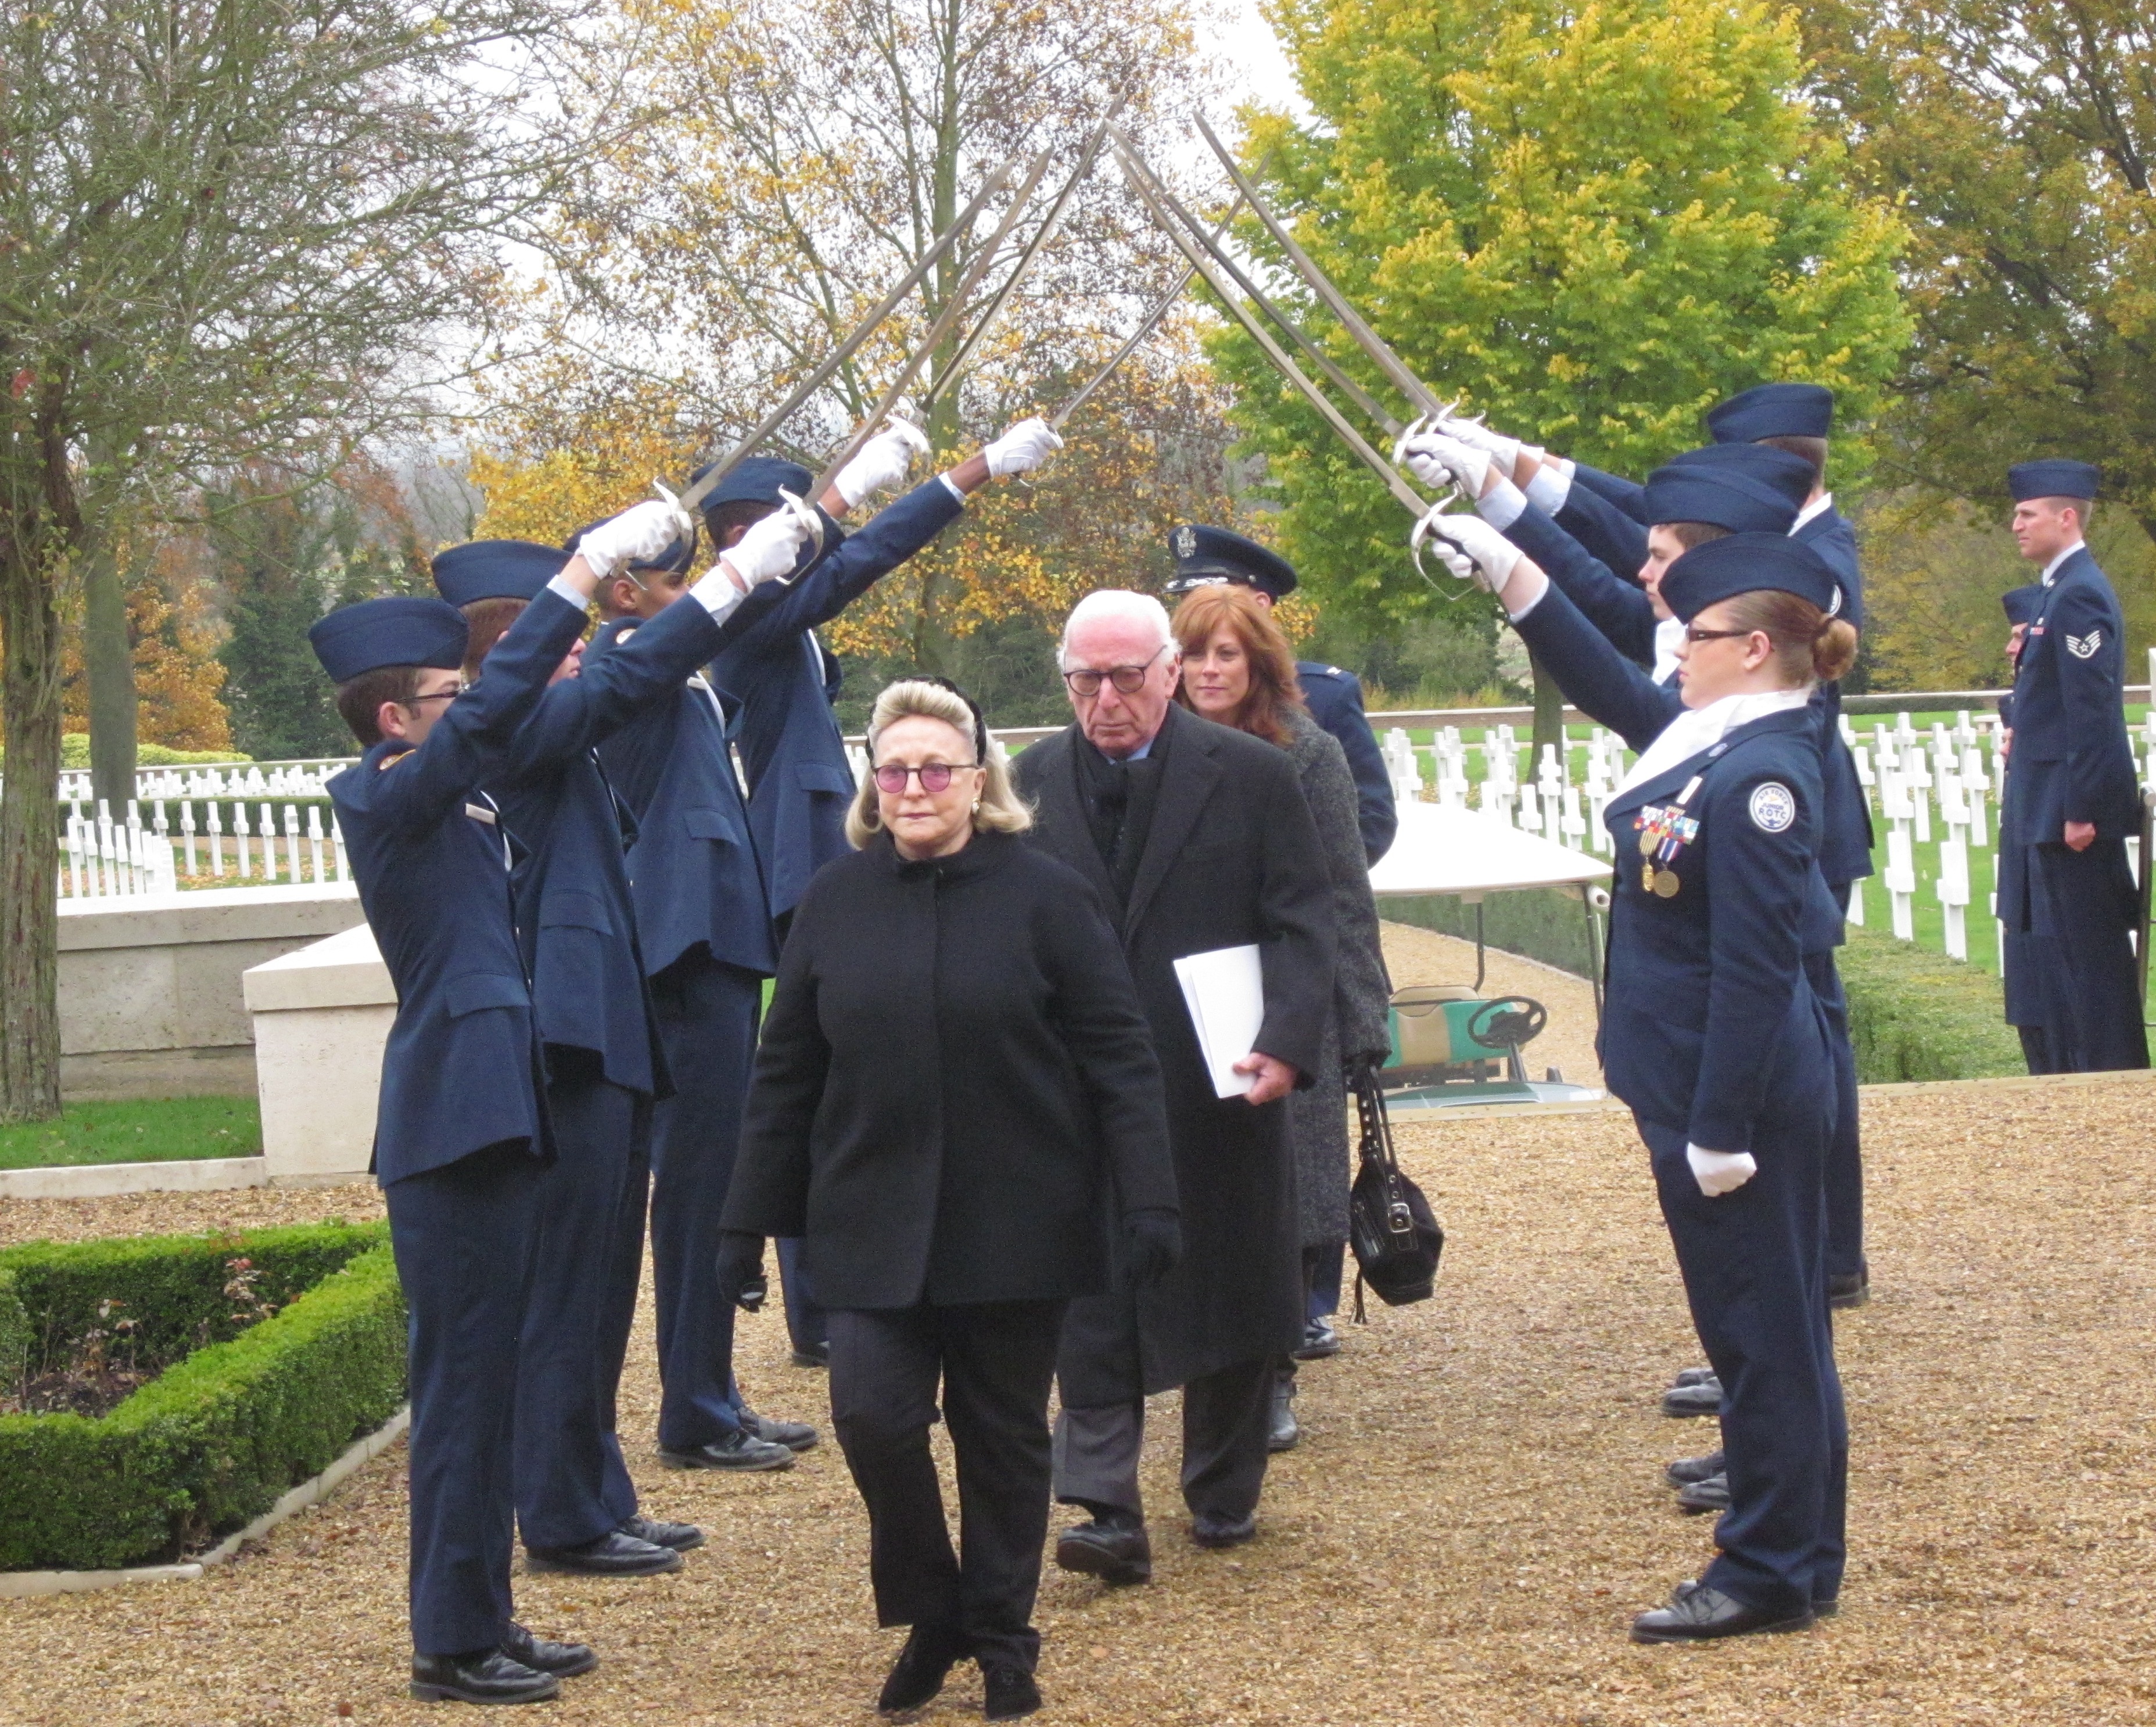 Four VIPs walk under sword-bearing men and women in uniform during 2012 Veterans Day ceremony.